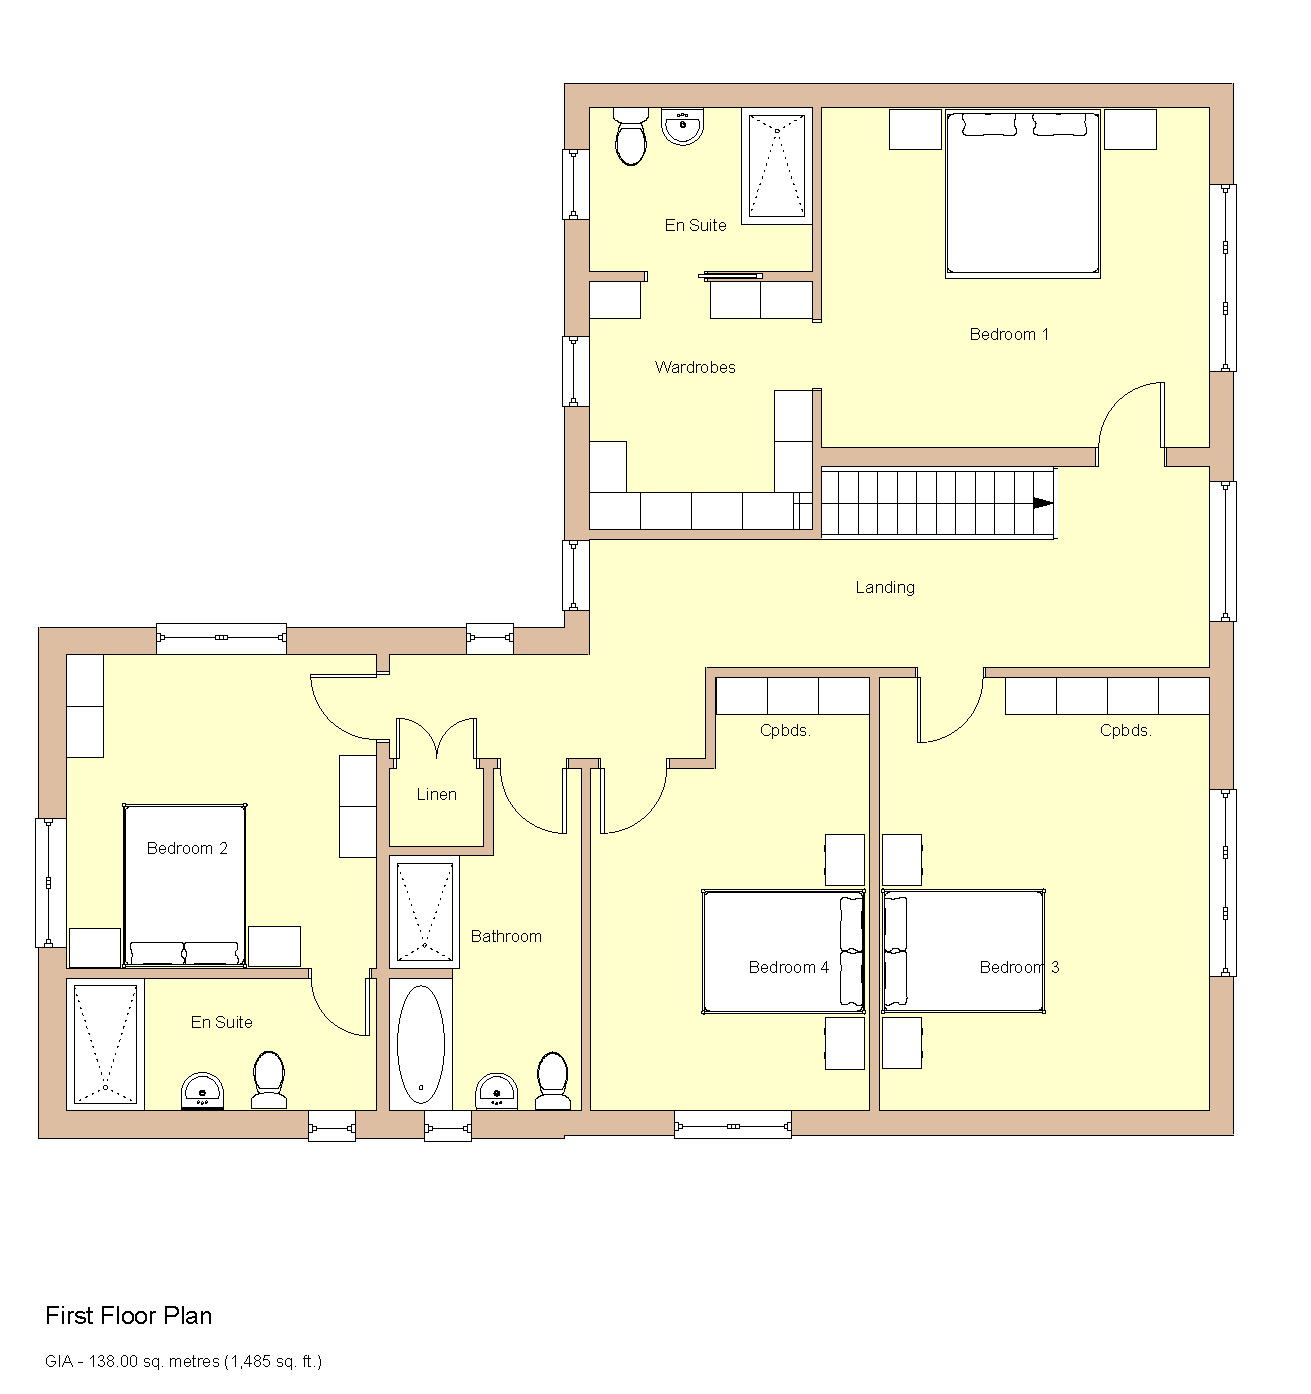 Proposed first floor layout, bespoke plot in Tunbridge Wells